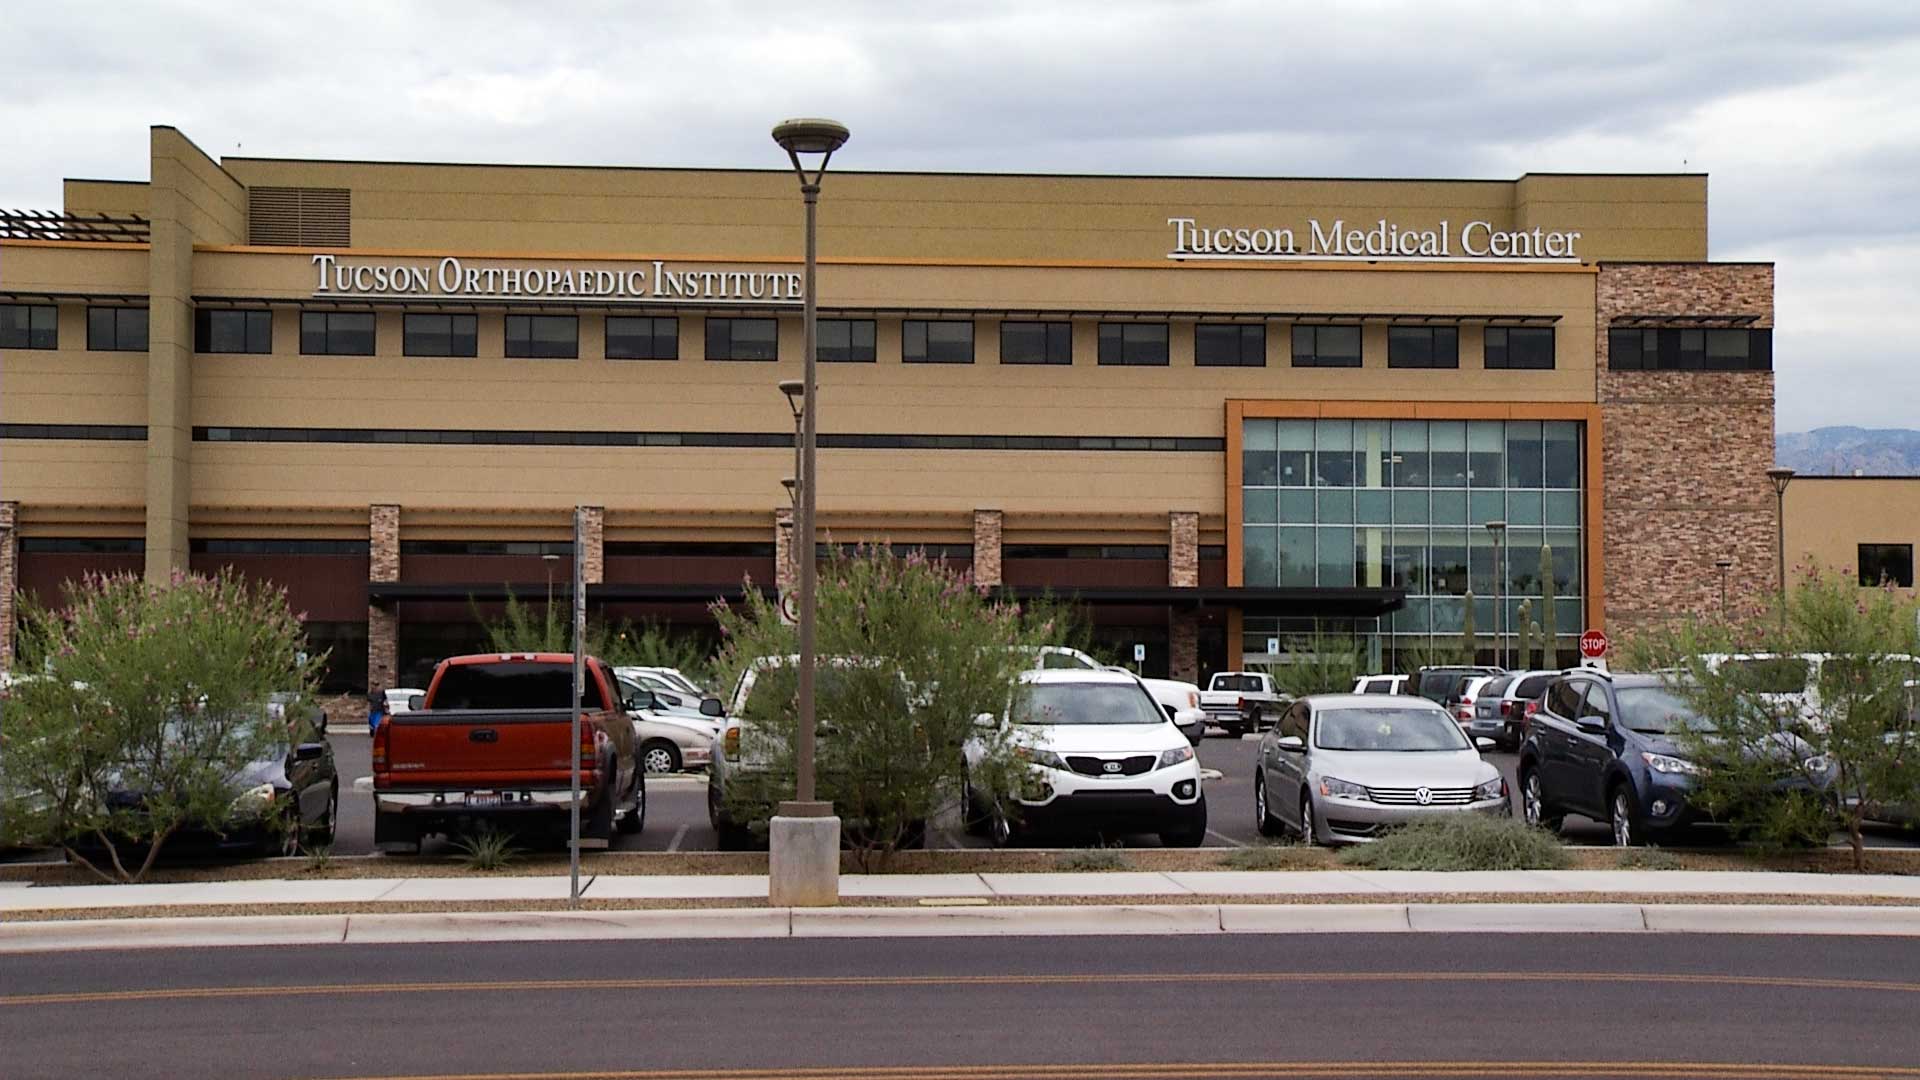 The Tucson Medical Center